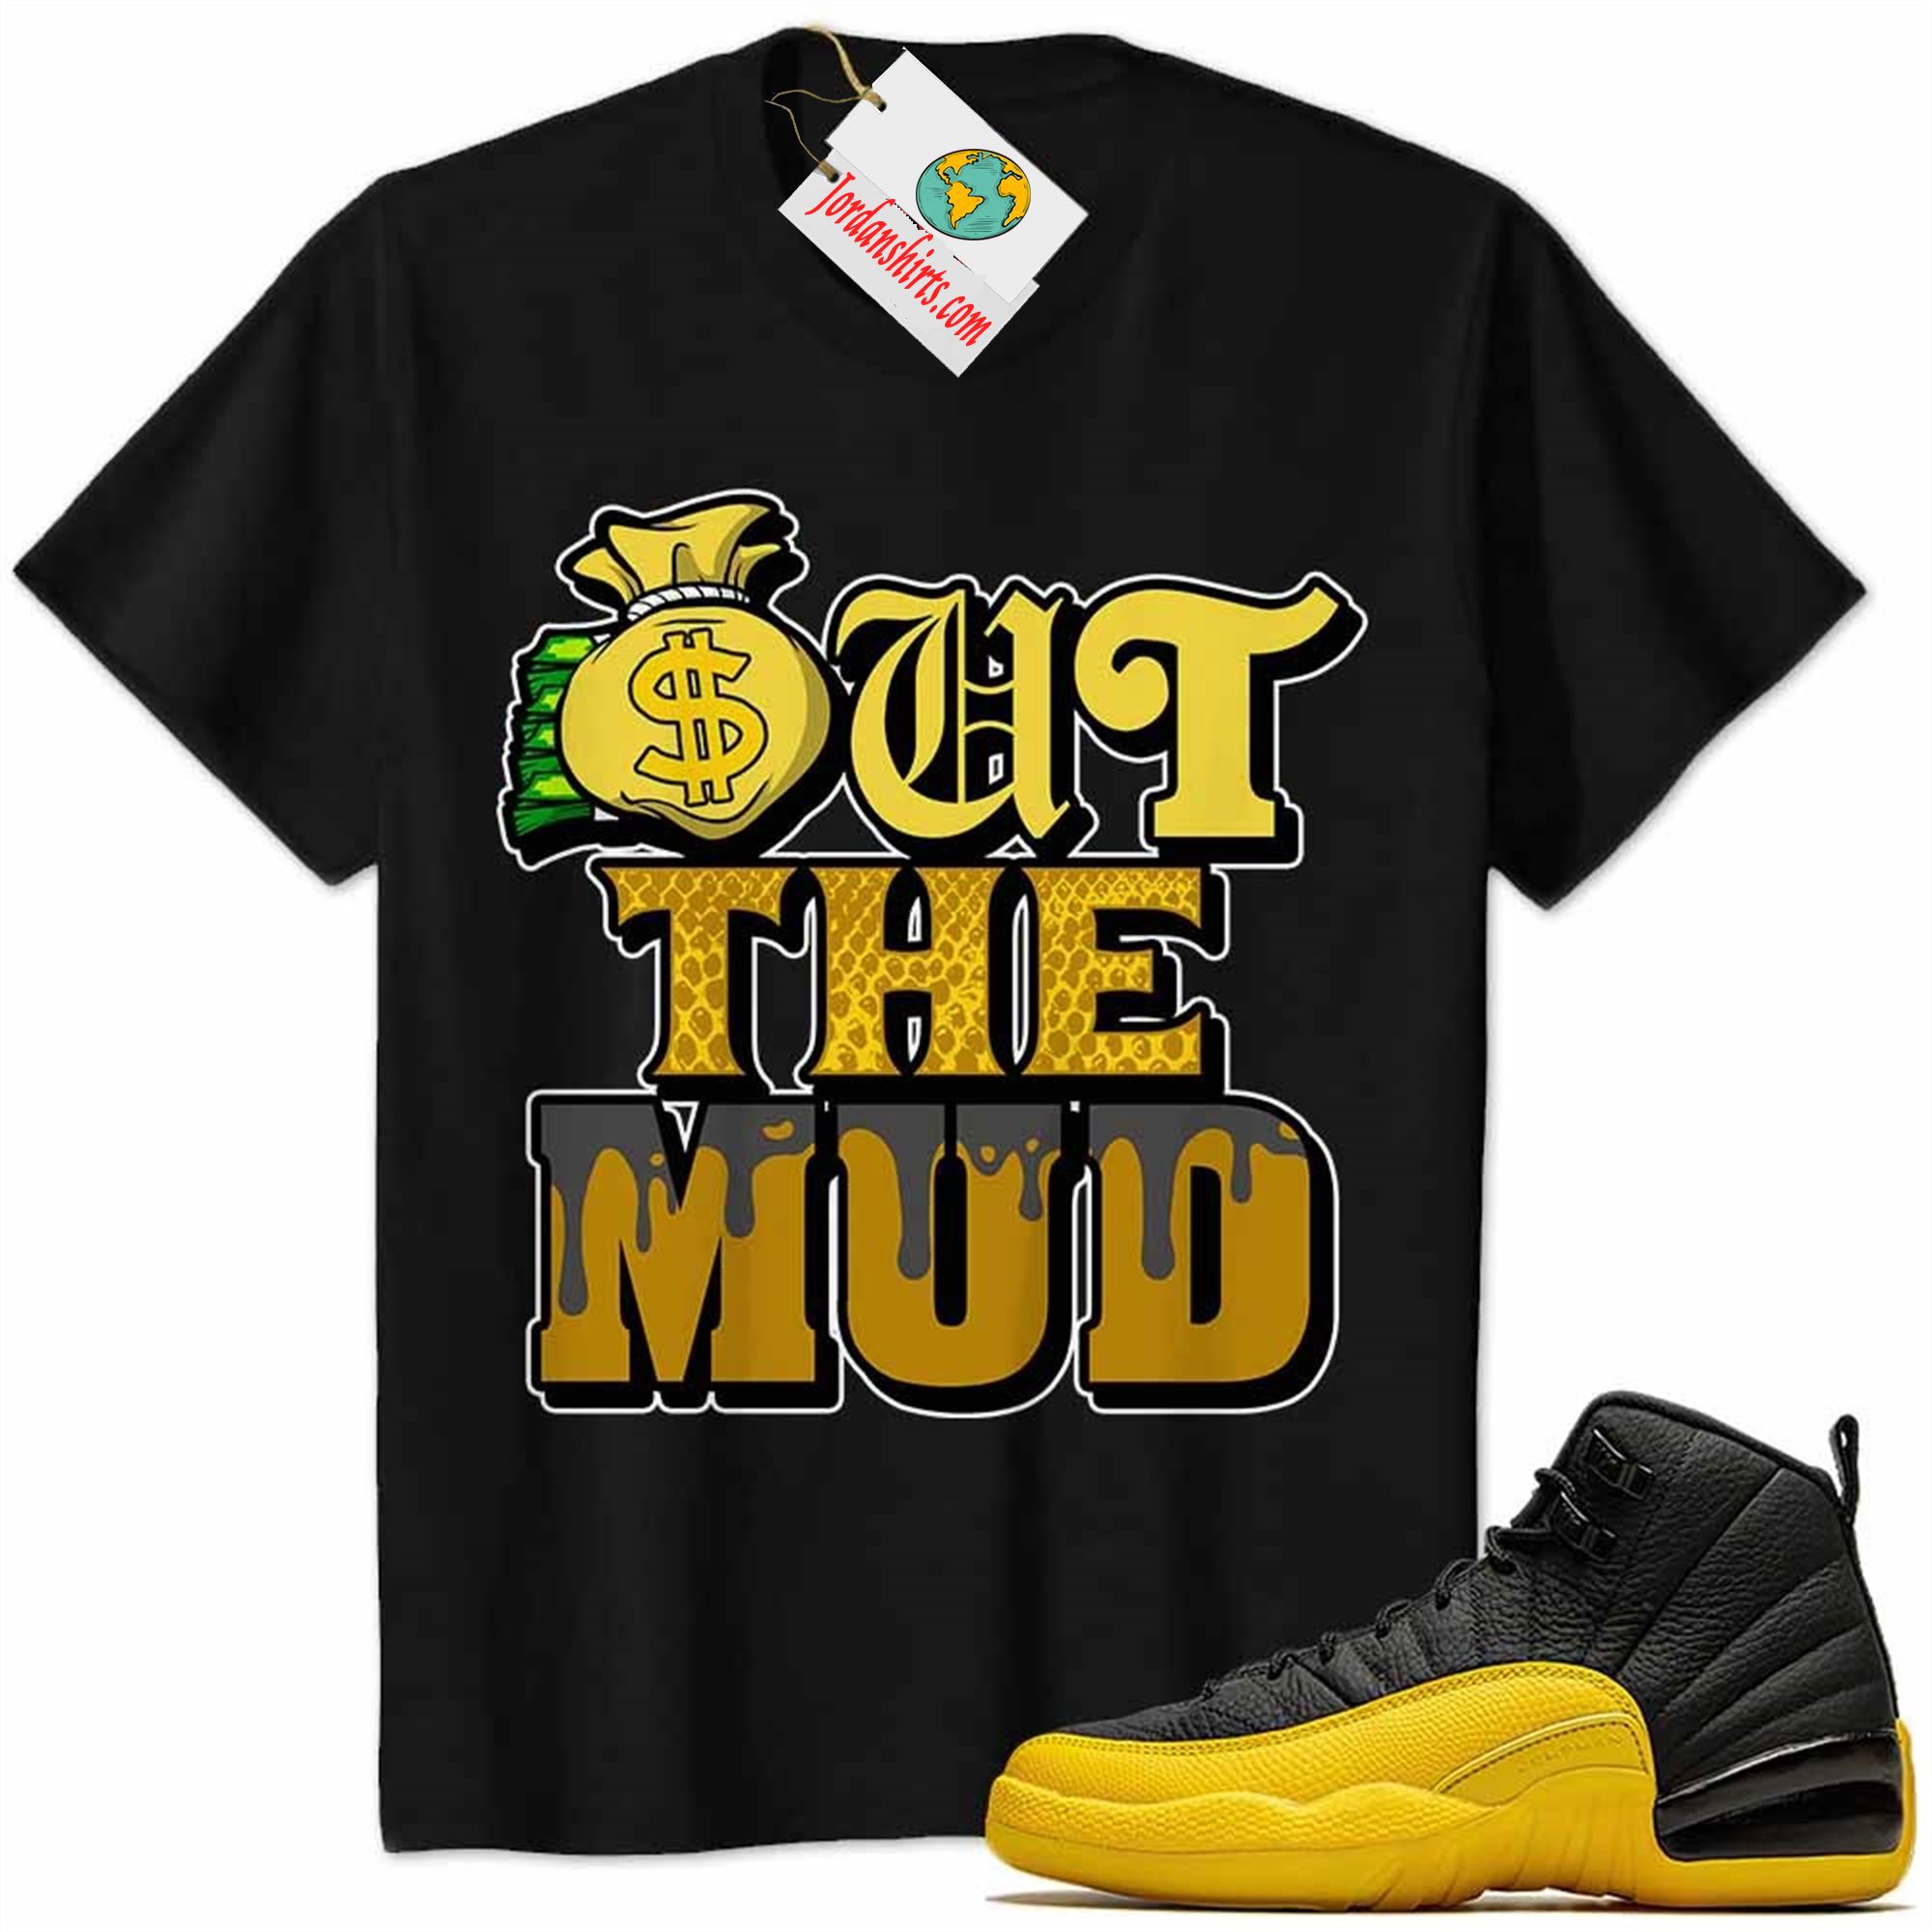 Jordan 12 Shirt, Jordan 12 University Gold Shirt Out The Mud Money Bag Black Full Size Up To 5xl